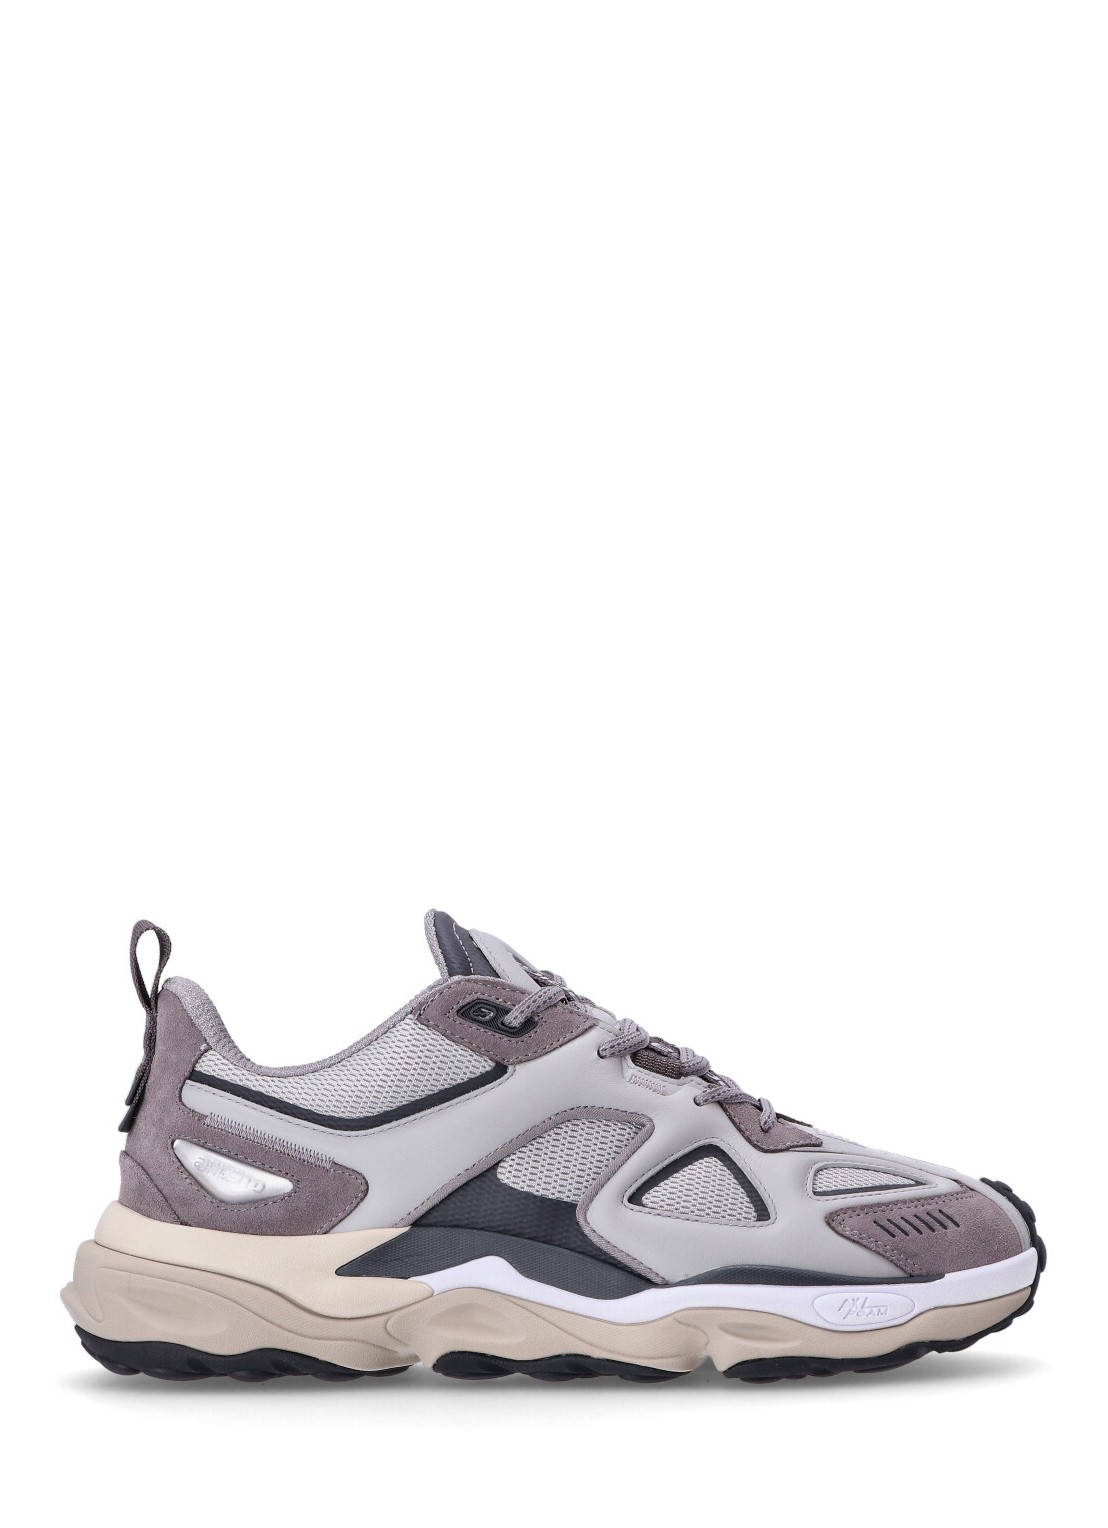 Sneaker axel arigato sneaker man satellite runner f1679002 light grey grey talla 44
 